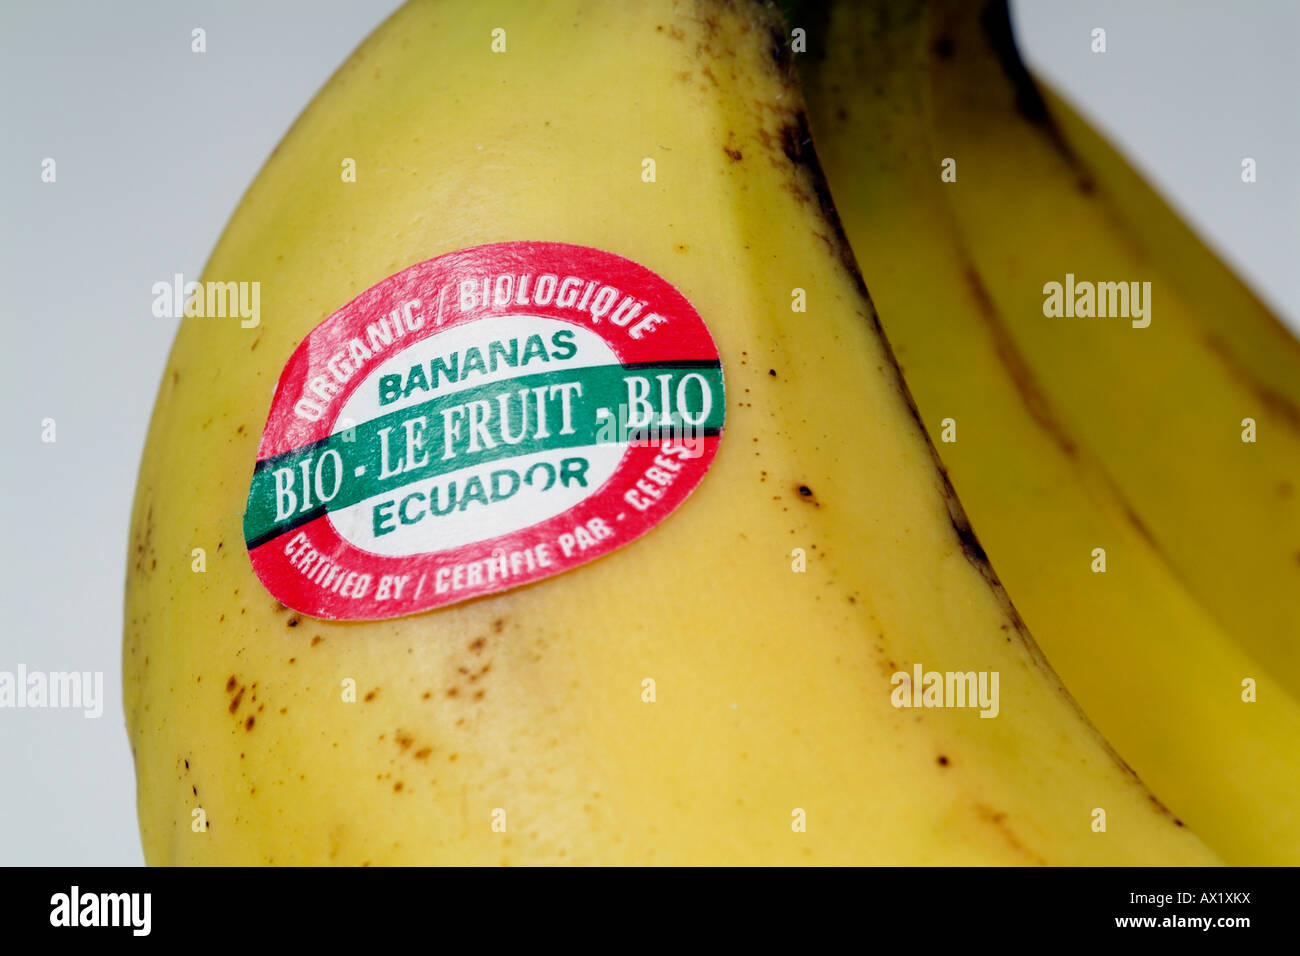 Banana with product sticker Fairtrade Organic Certification Stock Bio Label Banana Photo - Ecuador Alamy